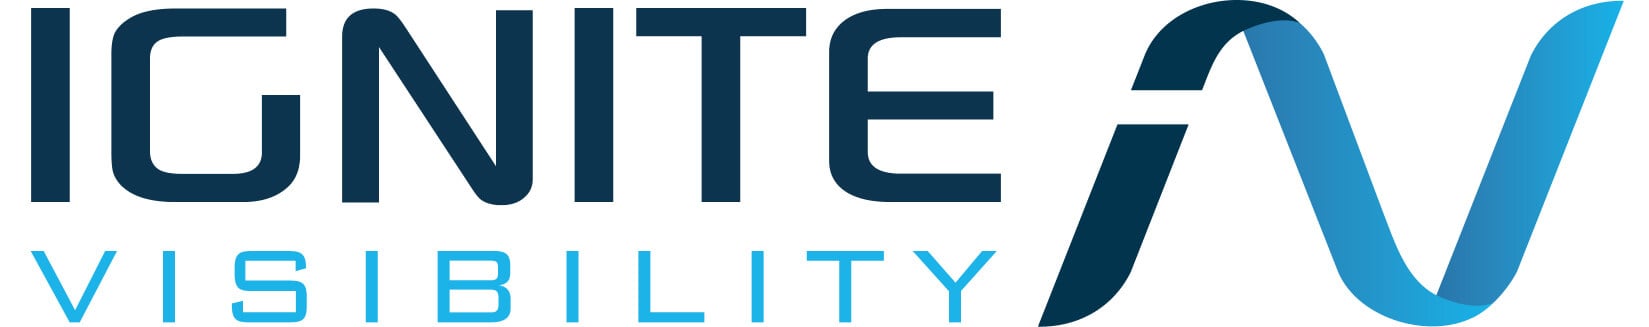 Top Online Marketing Company Logo: Ignite Visibility